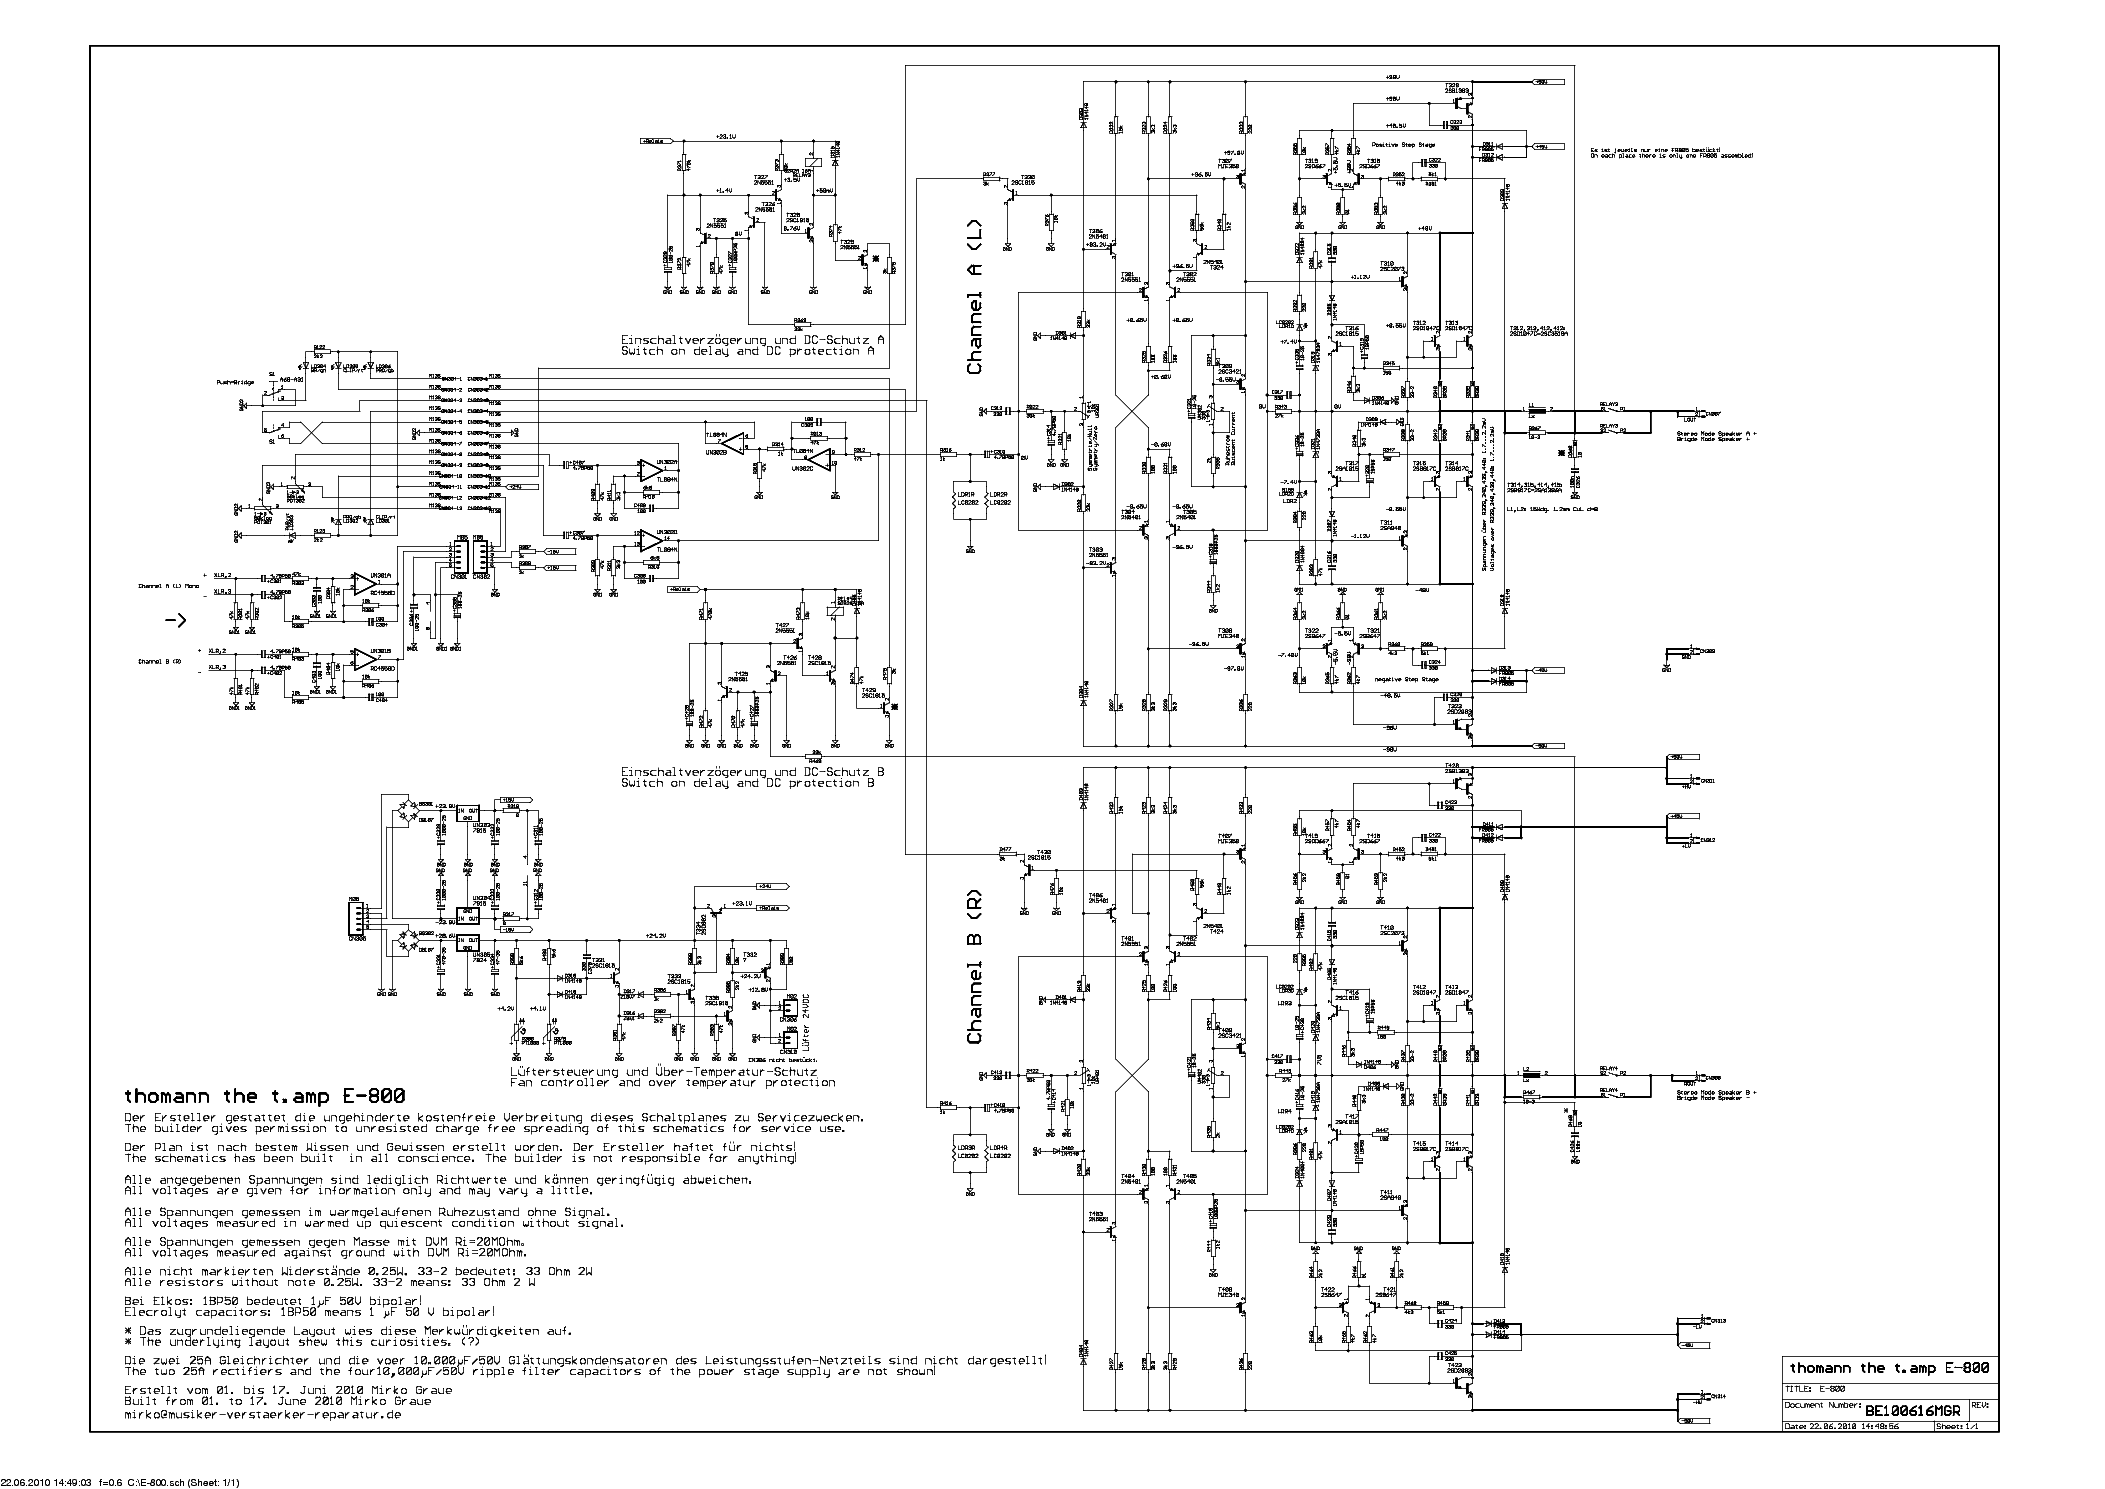 THOMANN T.AMP E-800 SCH service manual (1st page)